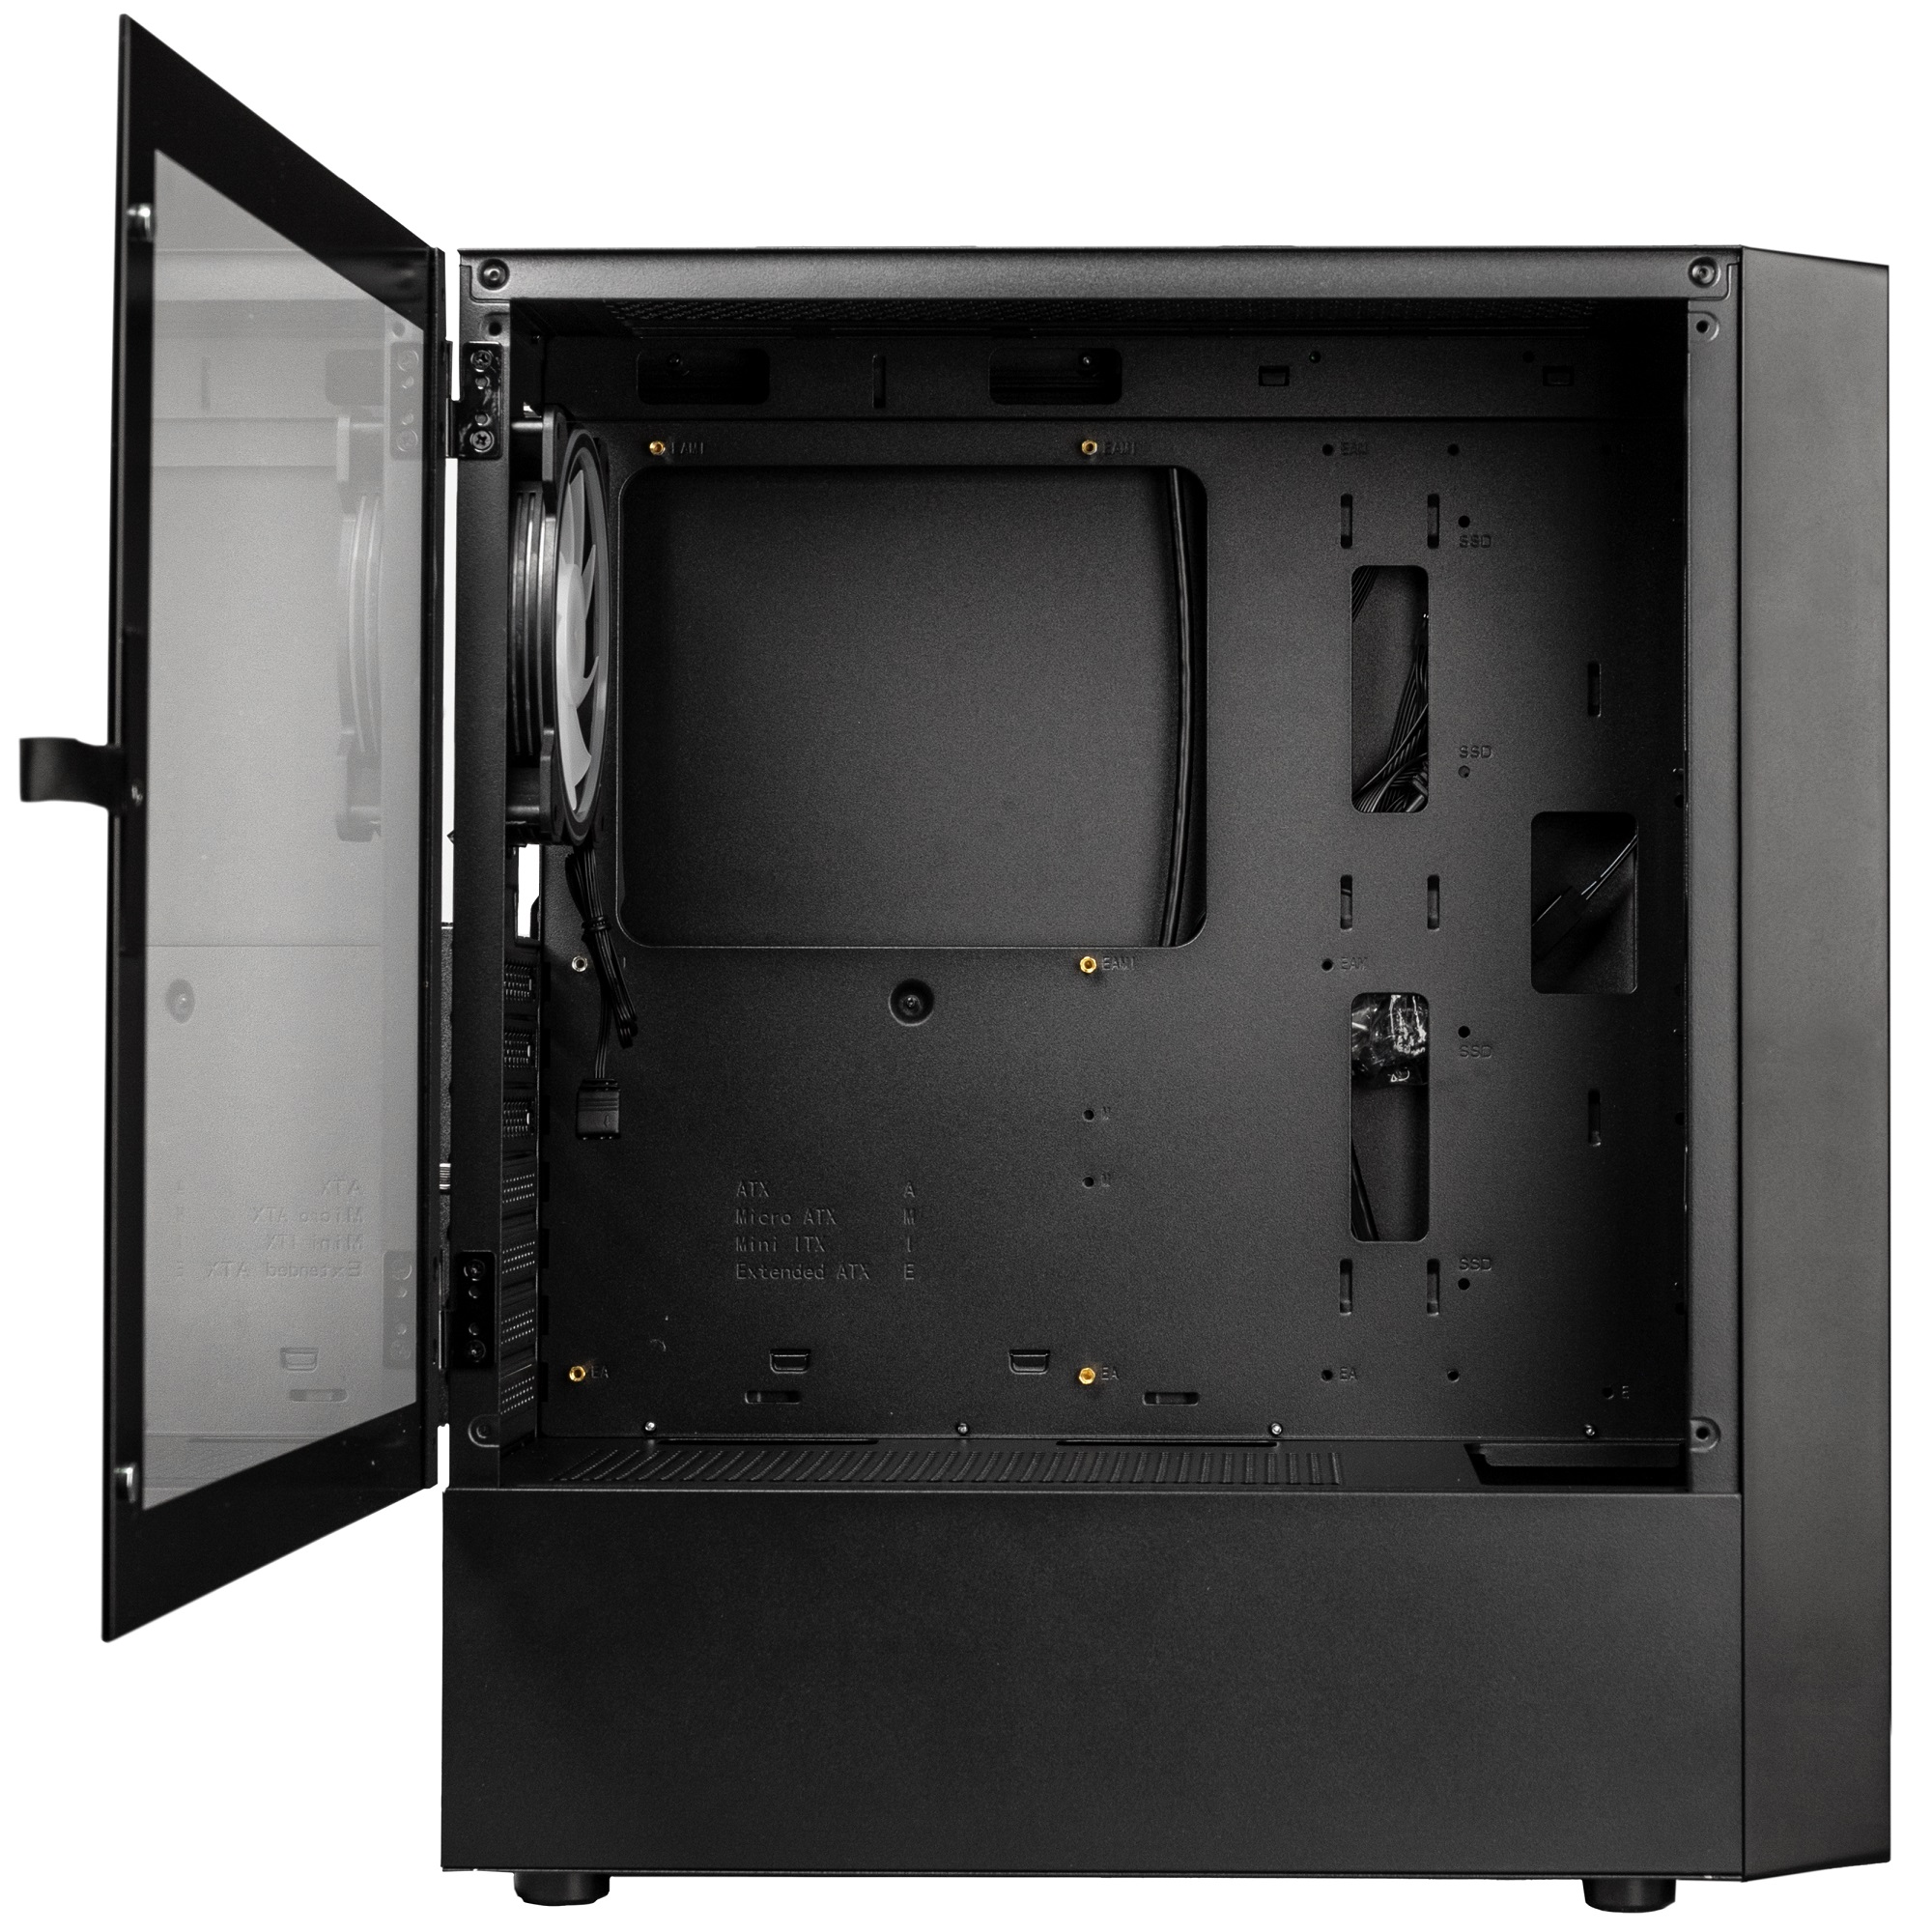 Kolink - Kolink Inspire Series K12 Midi Tower ARGB Gaming Case - Black Window